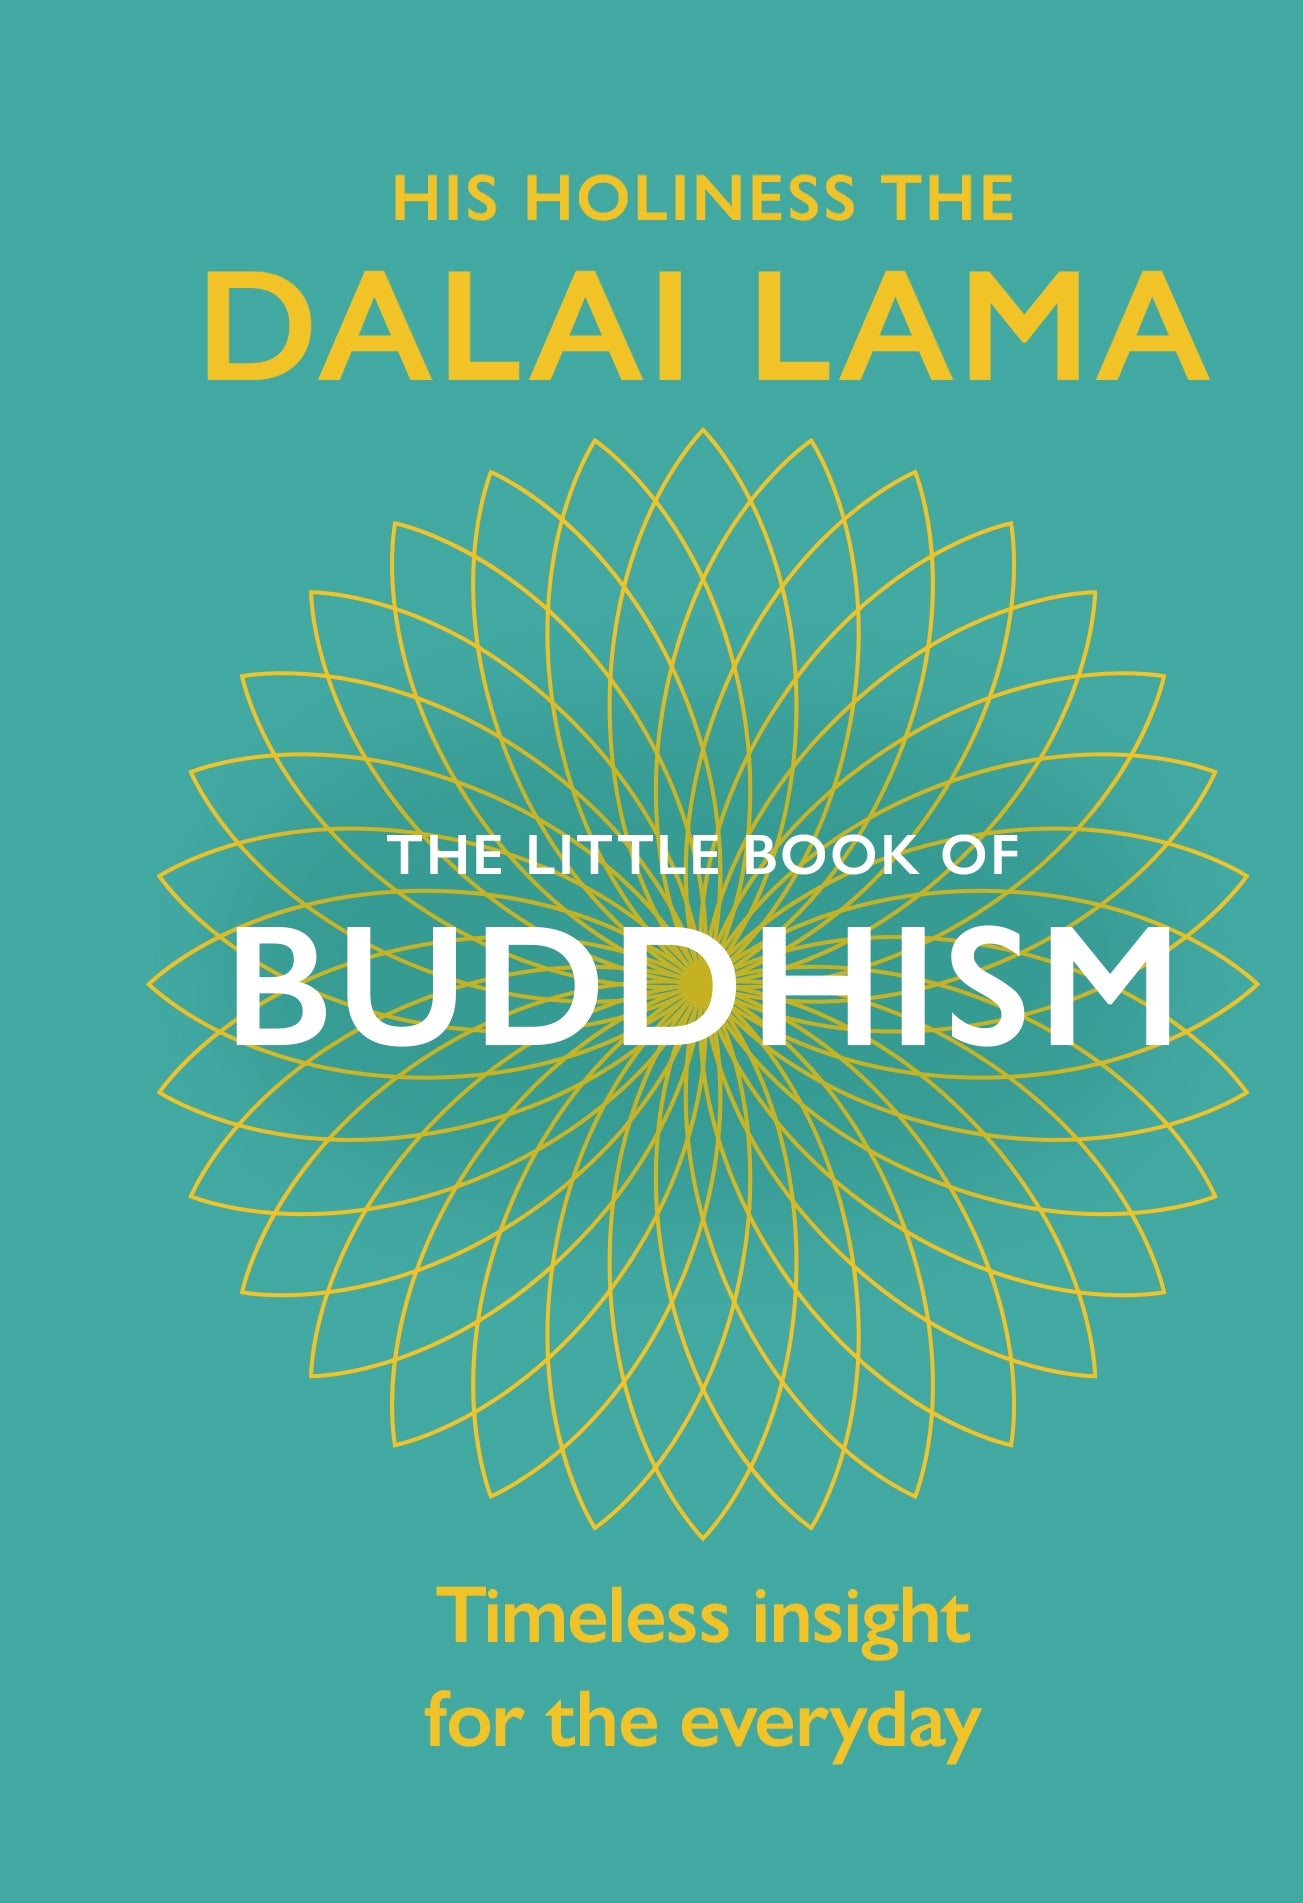 The Little Book of Buddhism; Dalai Lama